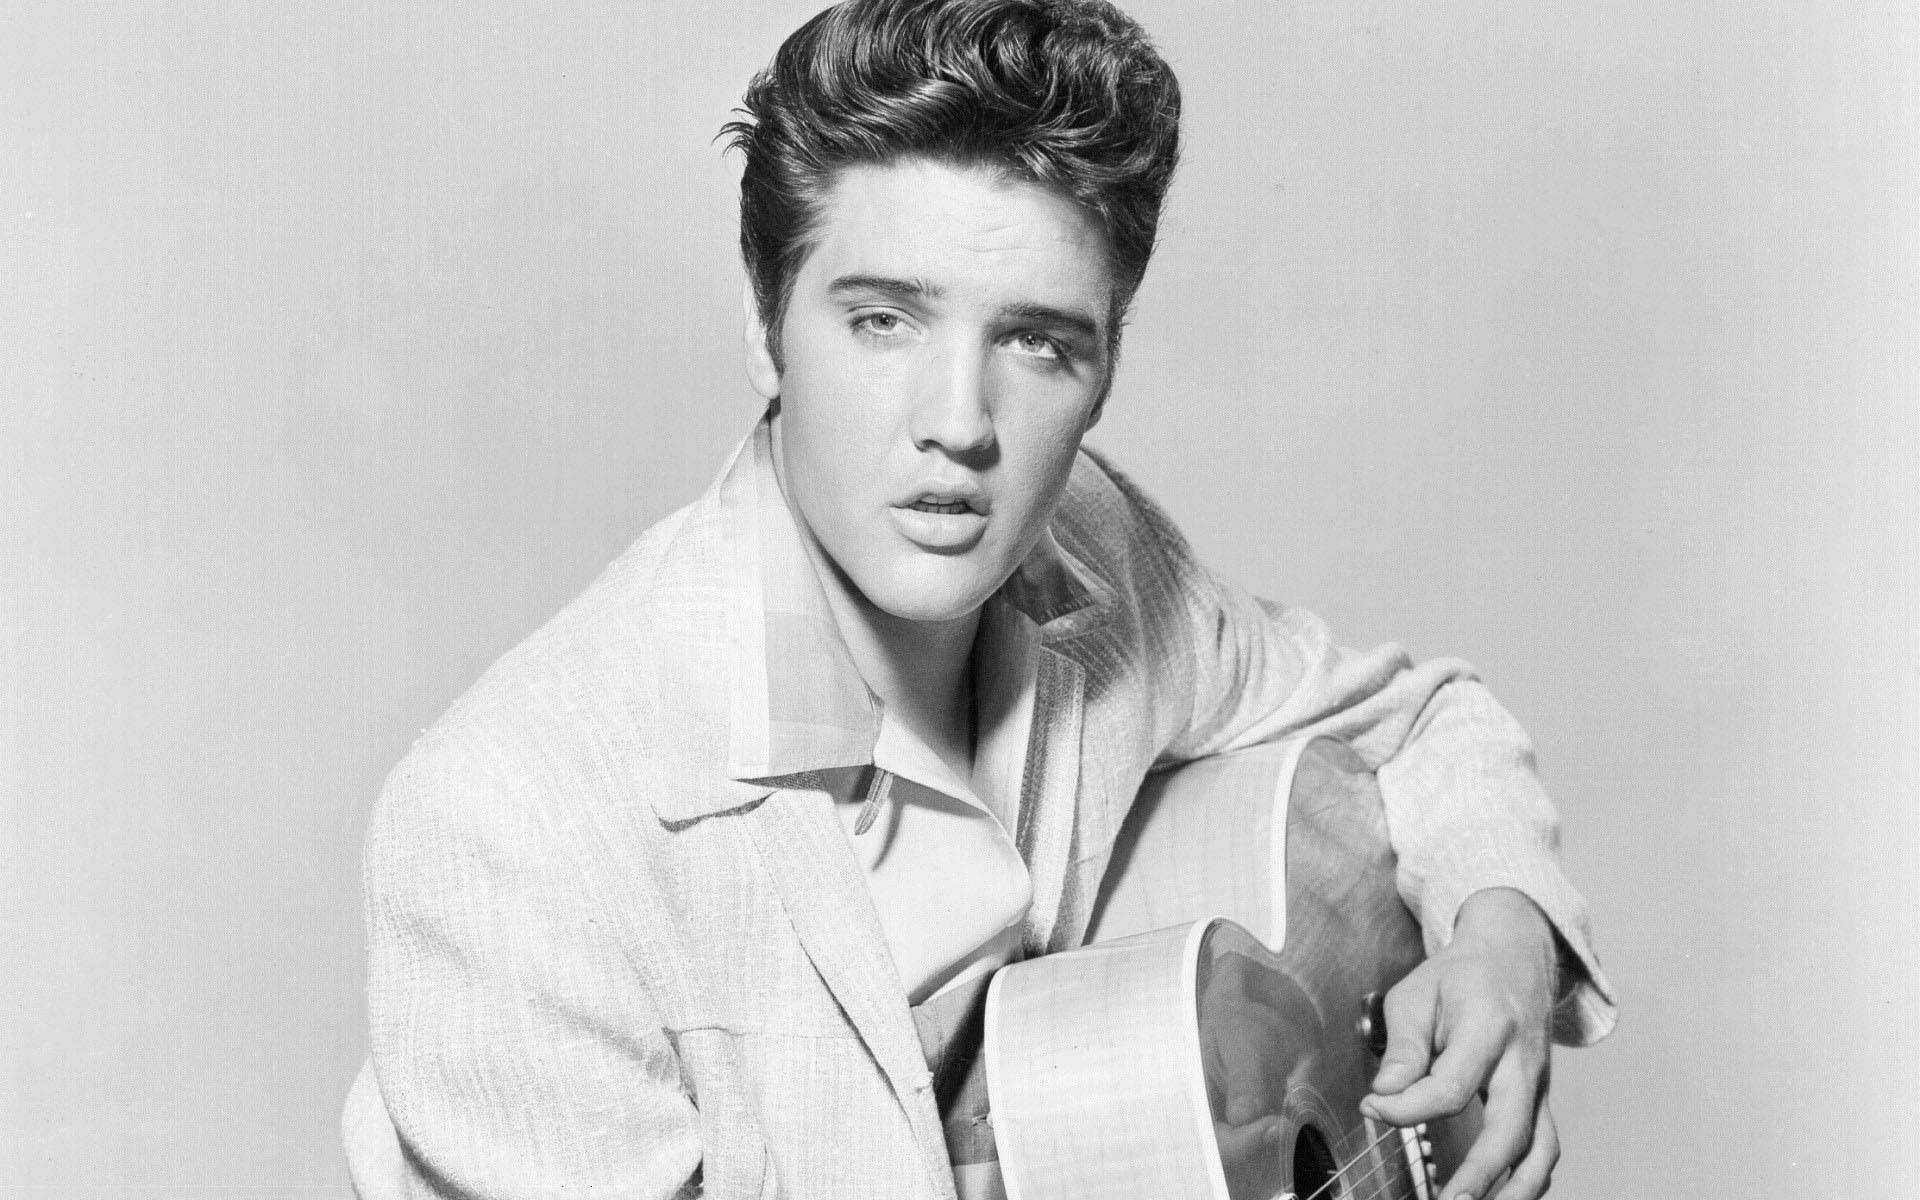 Free Elvis Presley Wallpaper Downloads, [100+] Elvis Presley Wallpapers for  FREE 